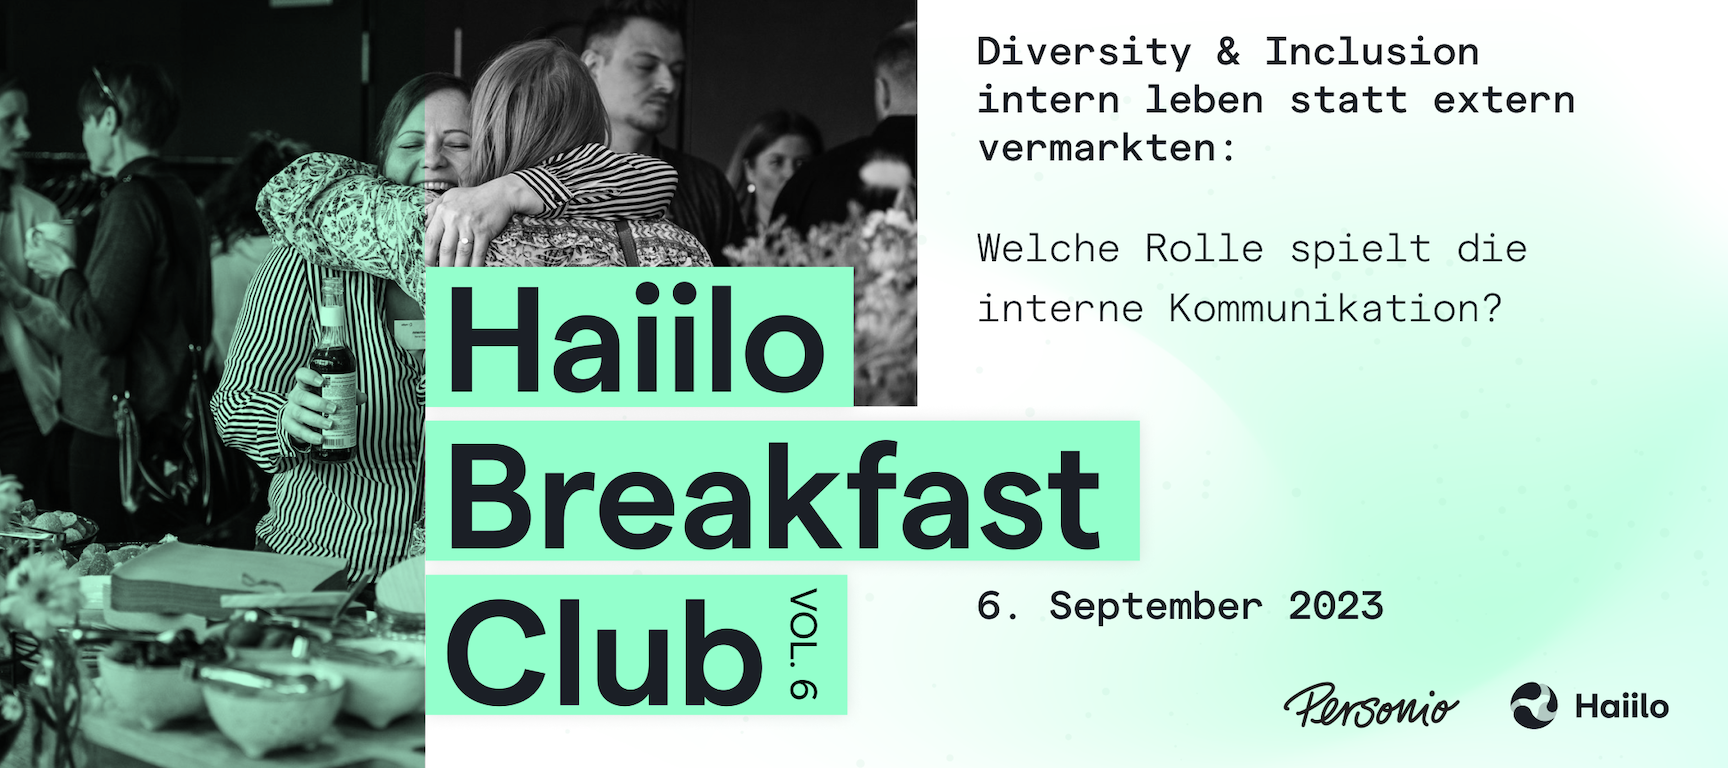 Haiilo Breakfast Club - meets Personio Voyager Community 🥐